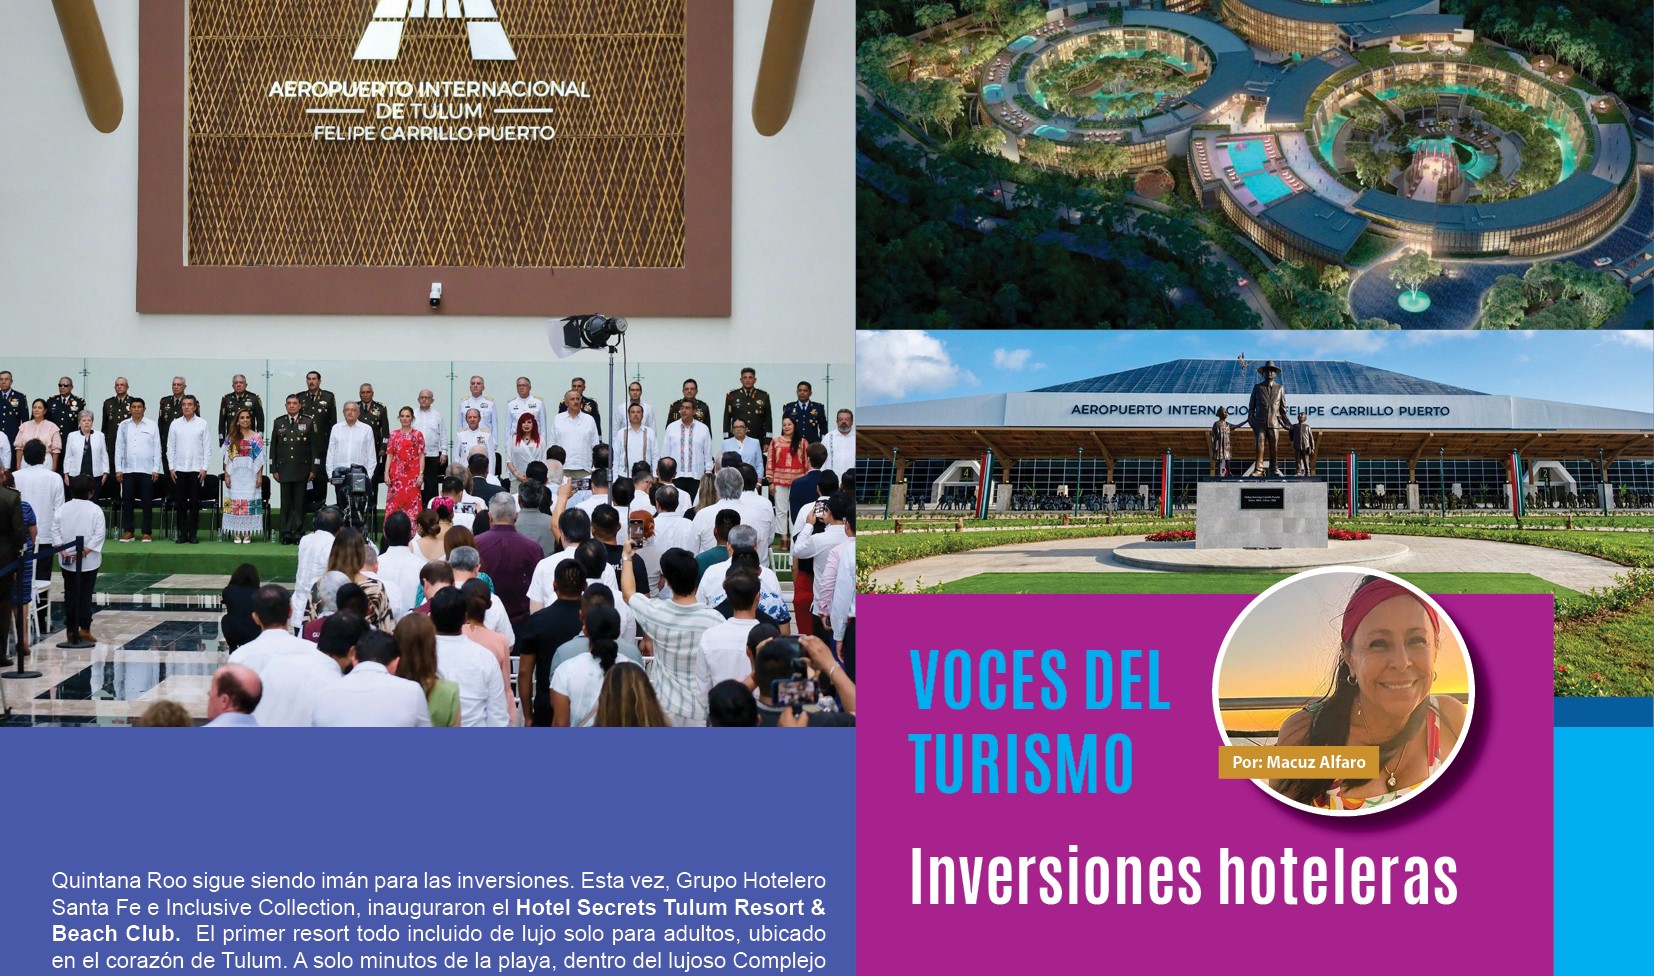 Inversiones hoteleras – VOCES DEL TURISMO